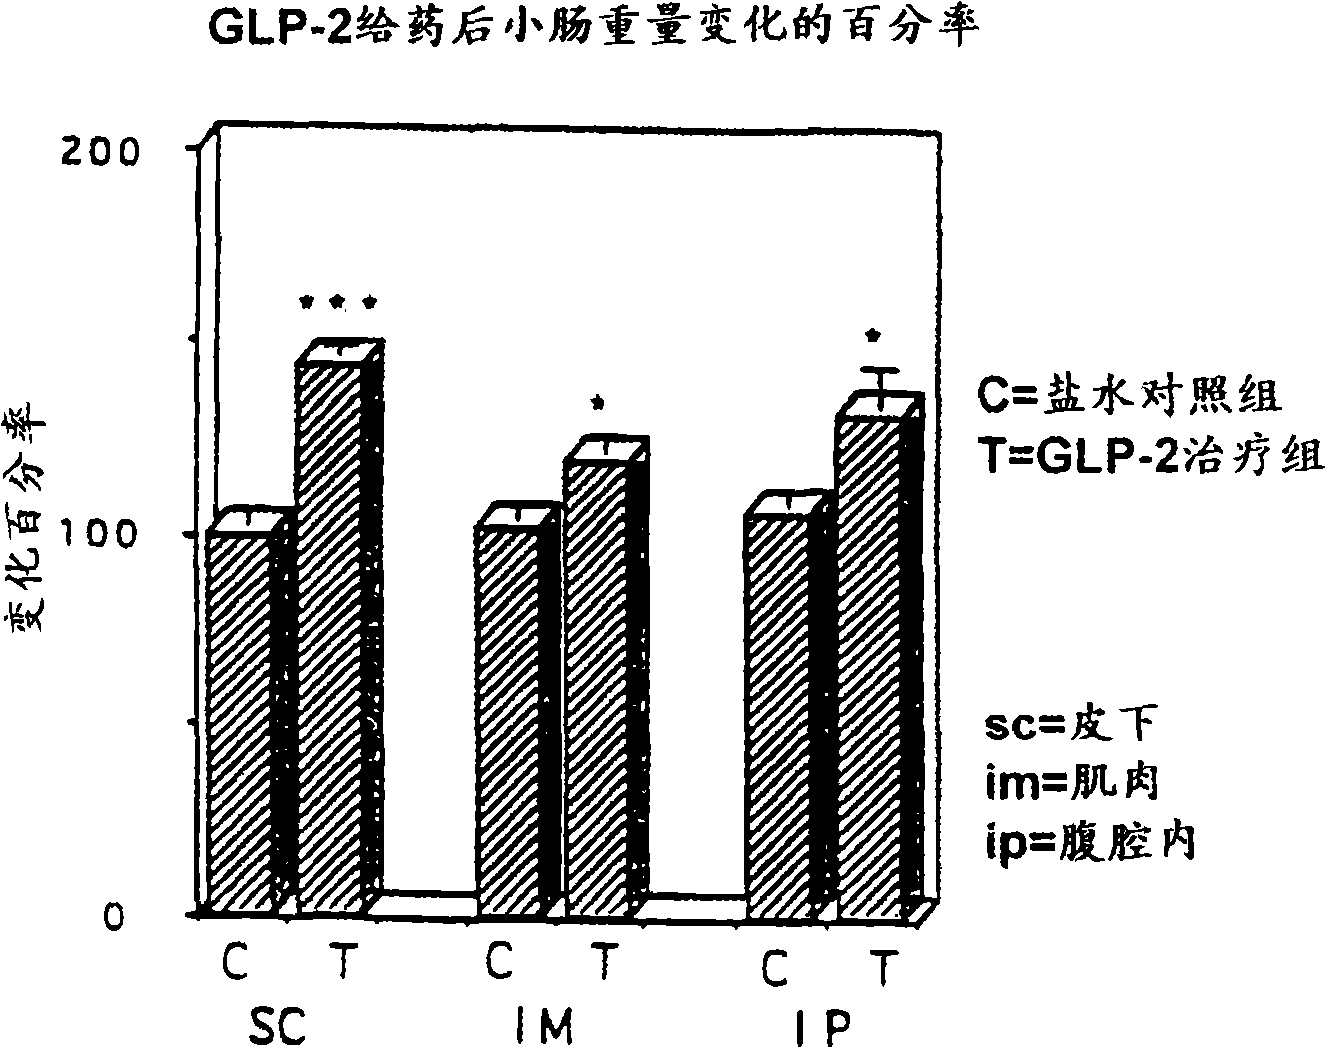 Intestinotrophic glucagon-like peptide-2 analogs